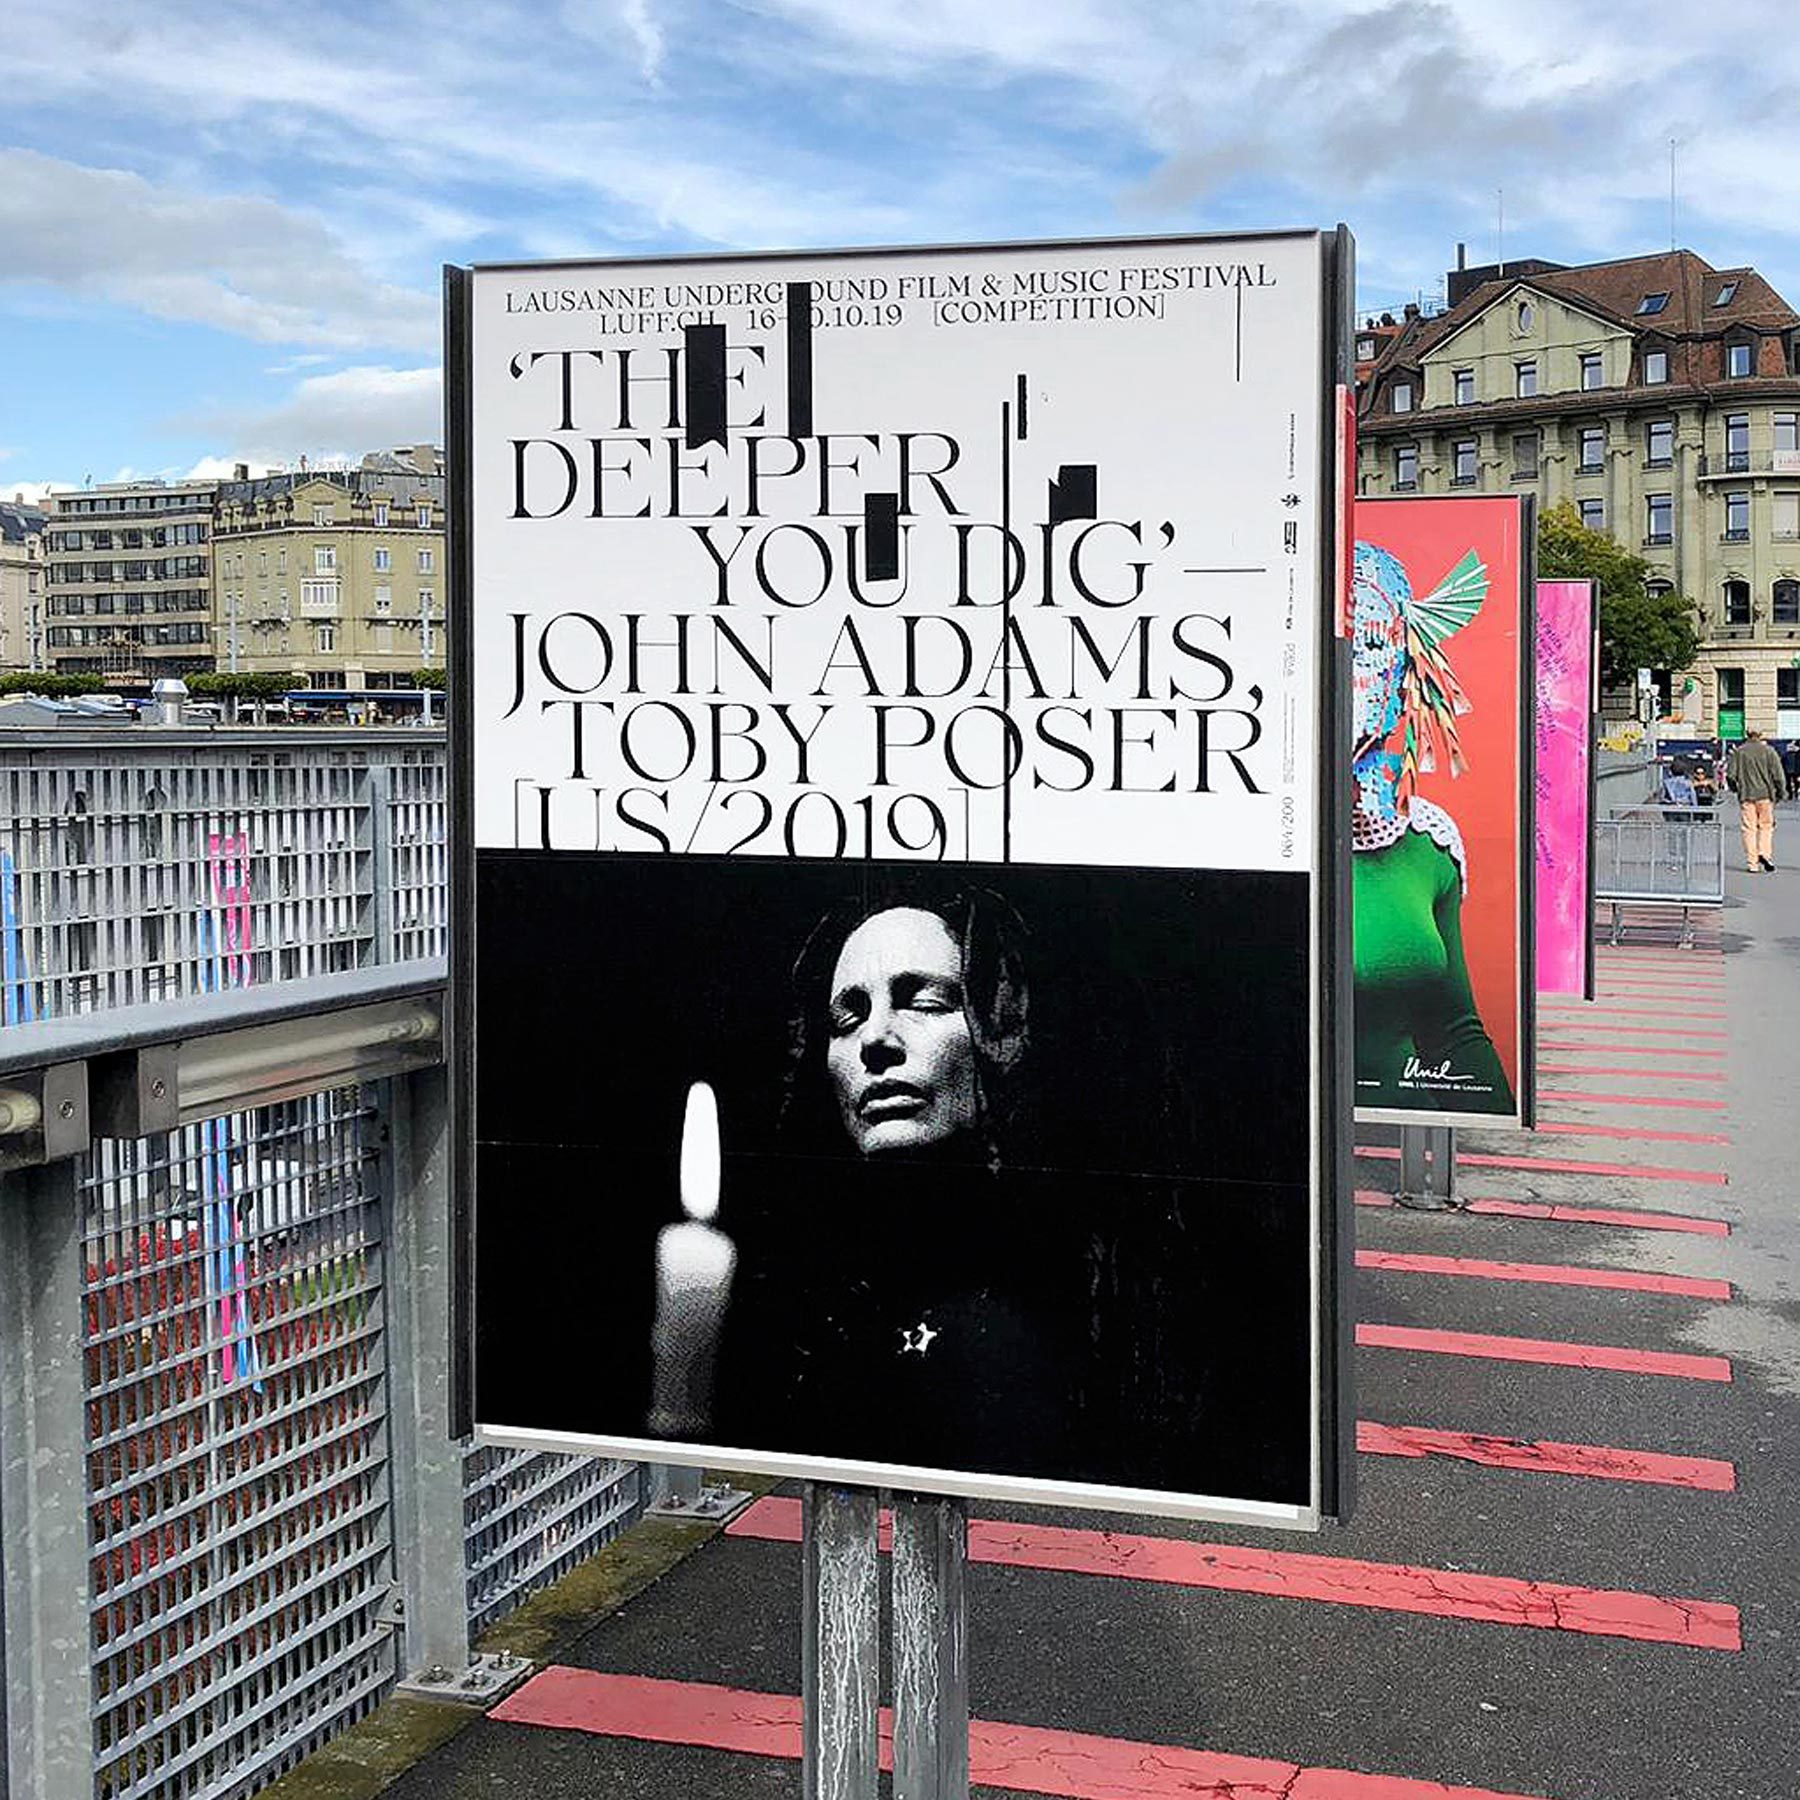 LUFF_Lausanne-Underground-Film-and-Music-Festival_2019_Dimitri-Jeannottat_1800x1200_18